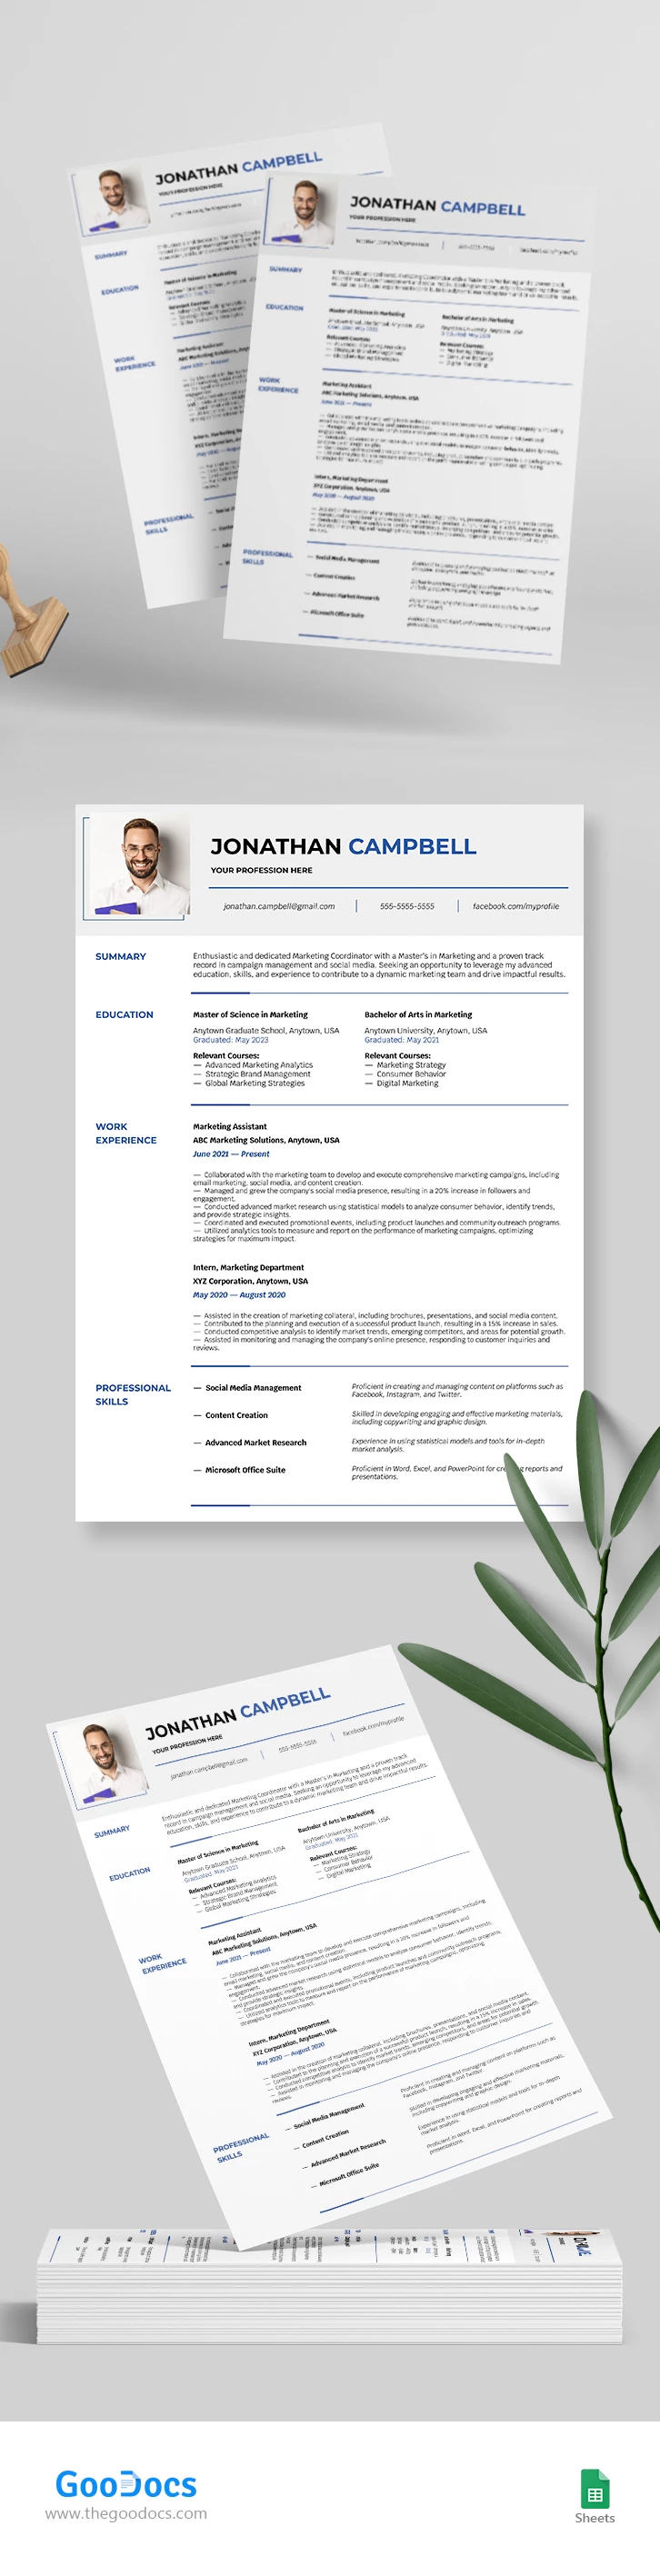 Simple Clean Resume - free Google Docs Template - 10067945